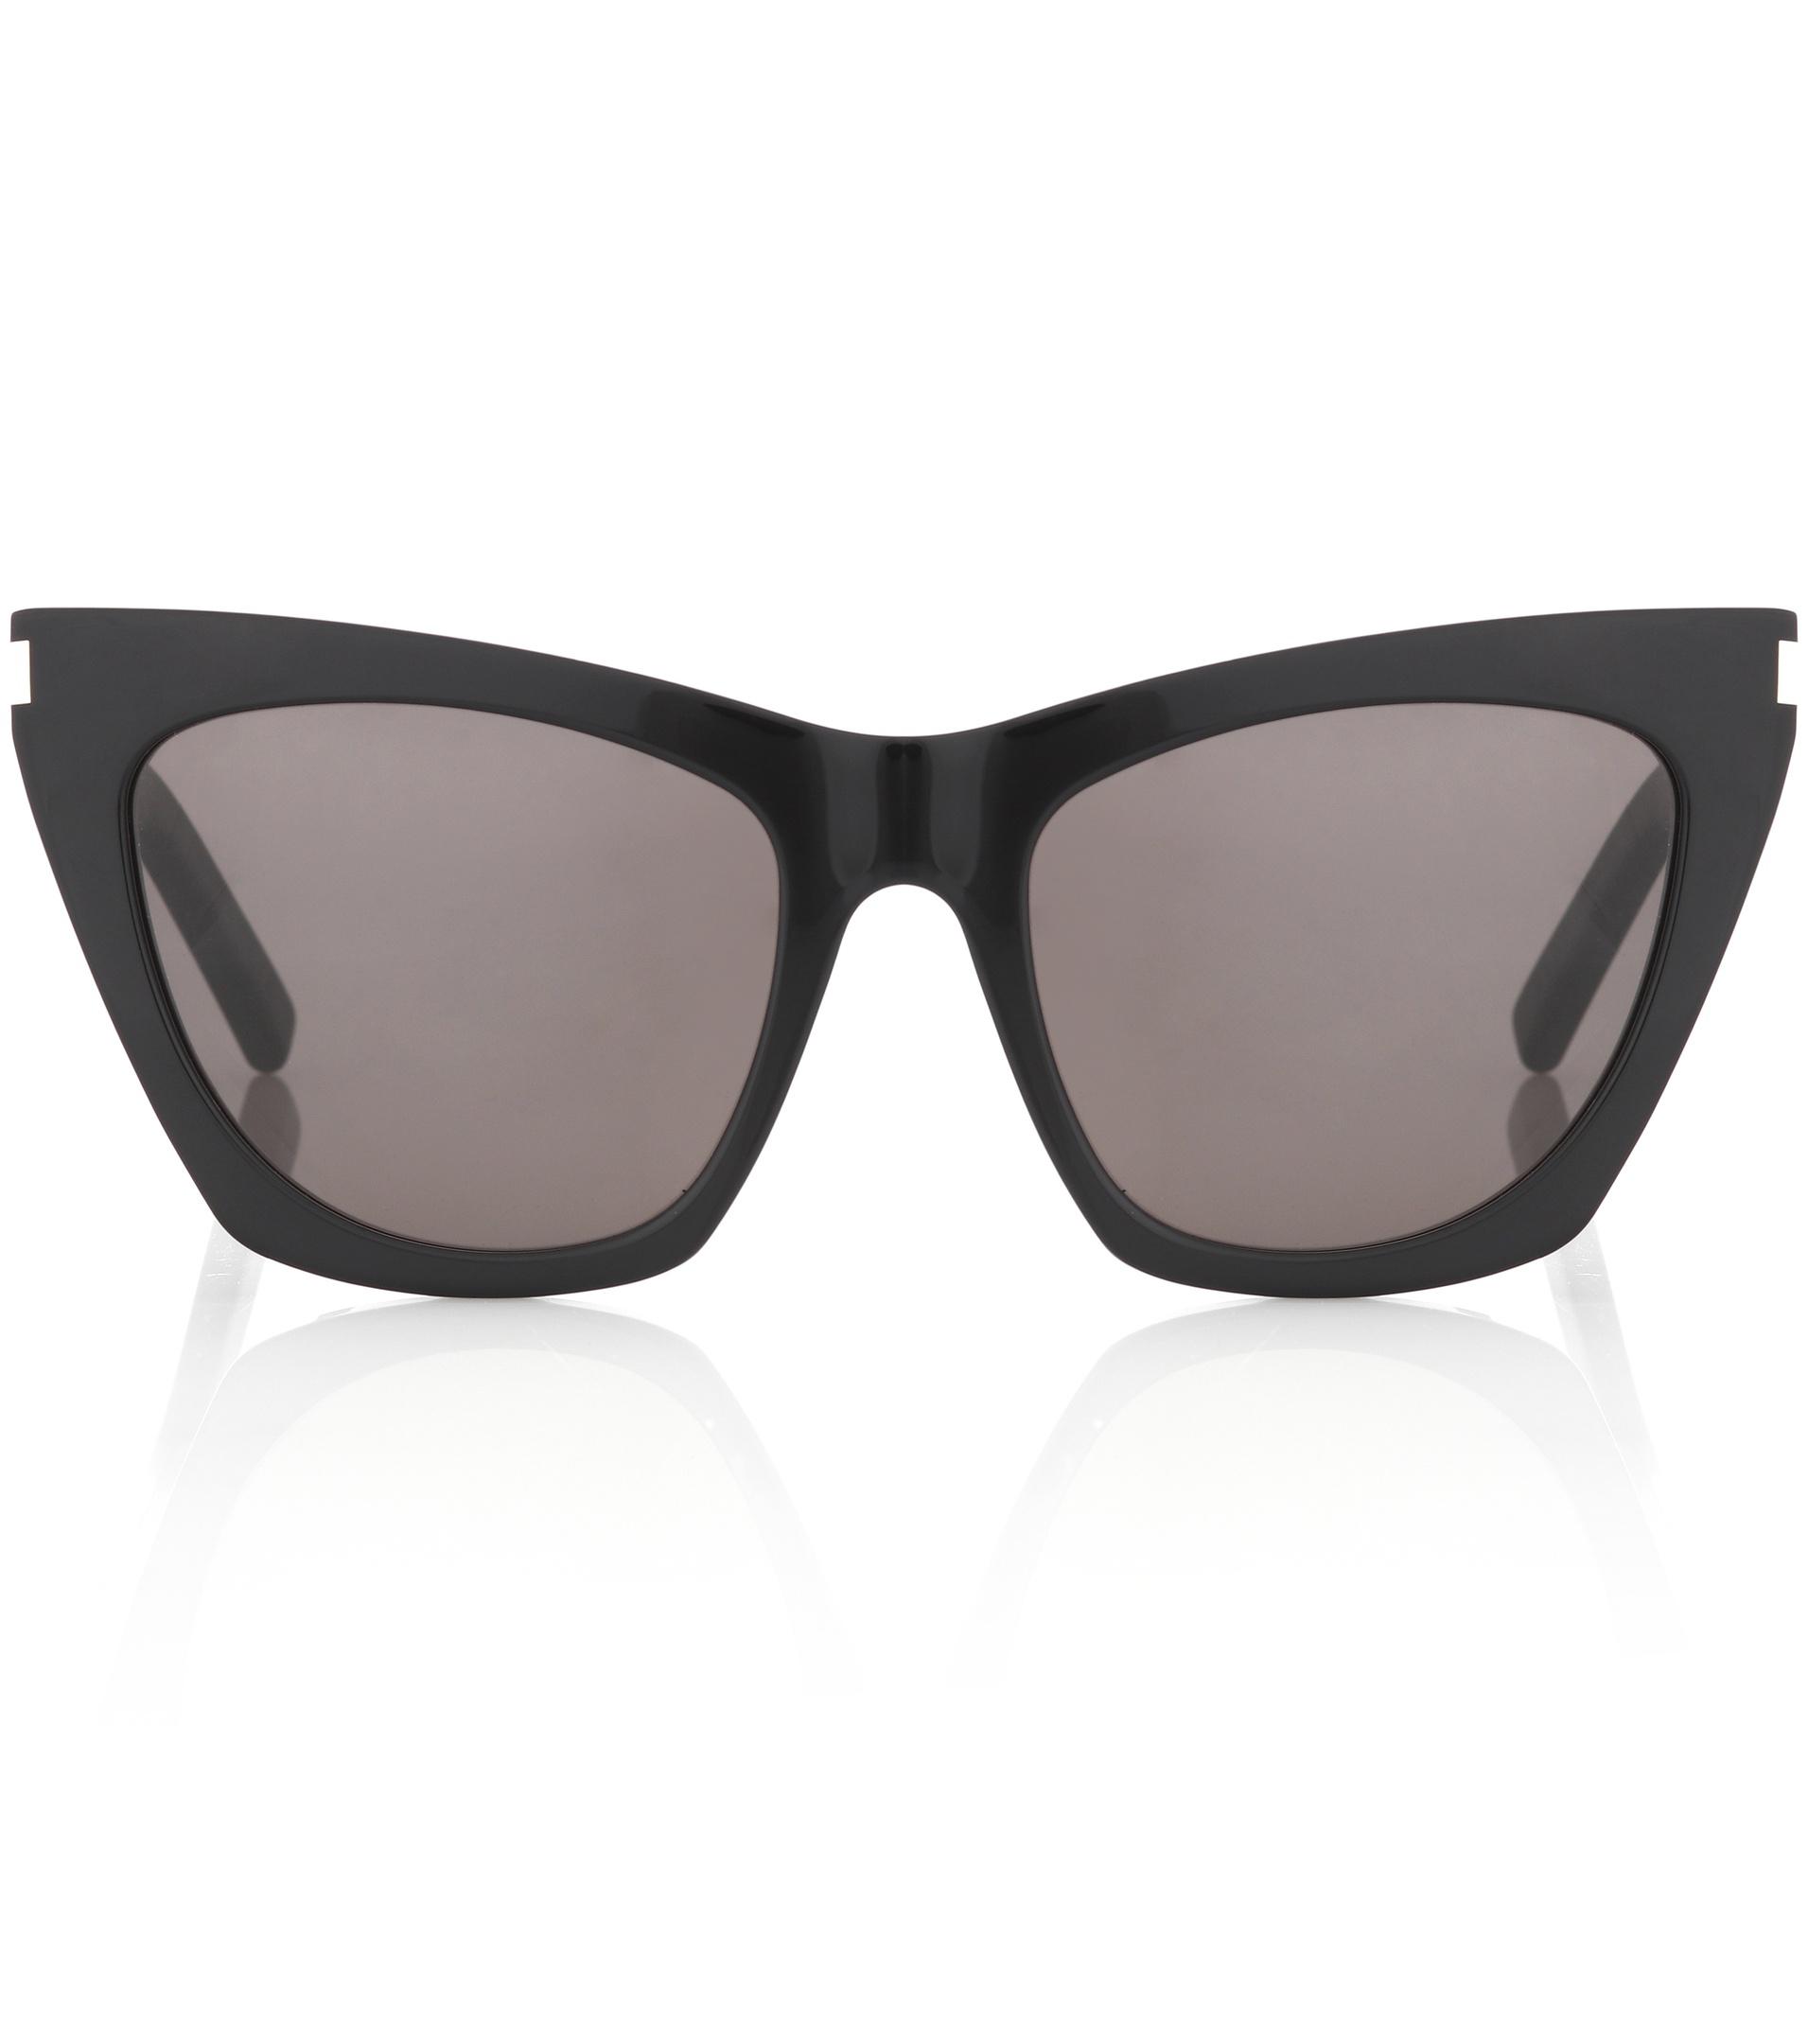 Saint Laurent Synthetic Kate Sunglasses in Black - Lyst